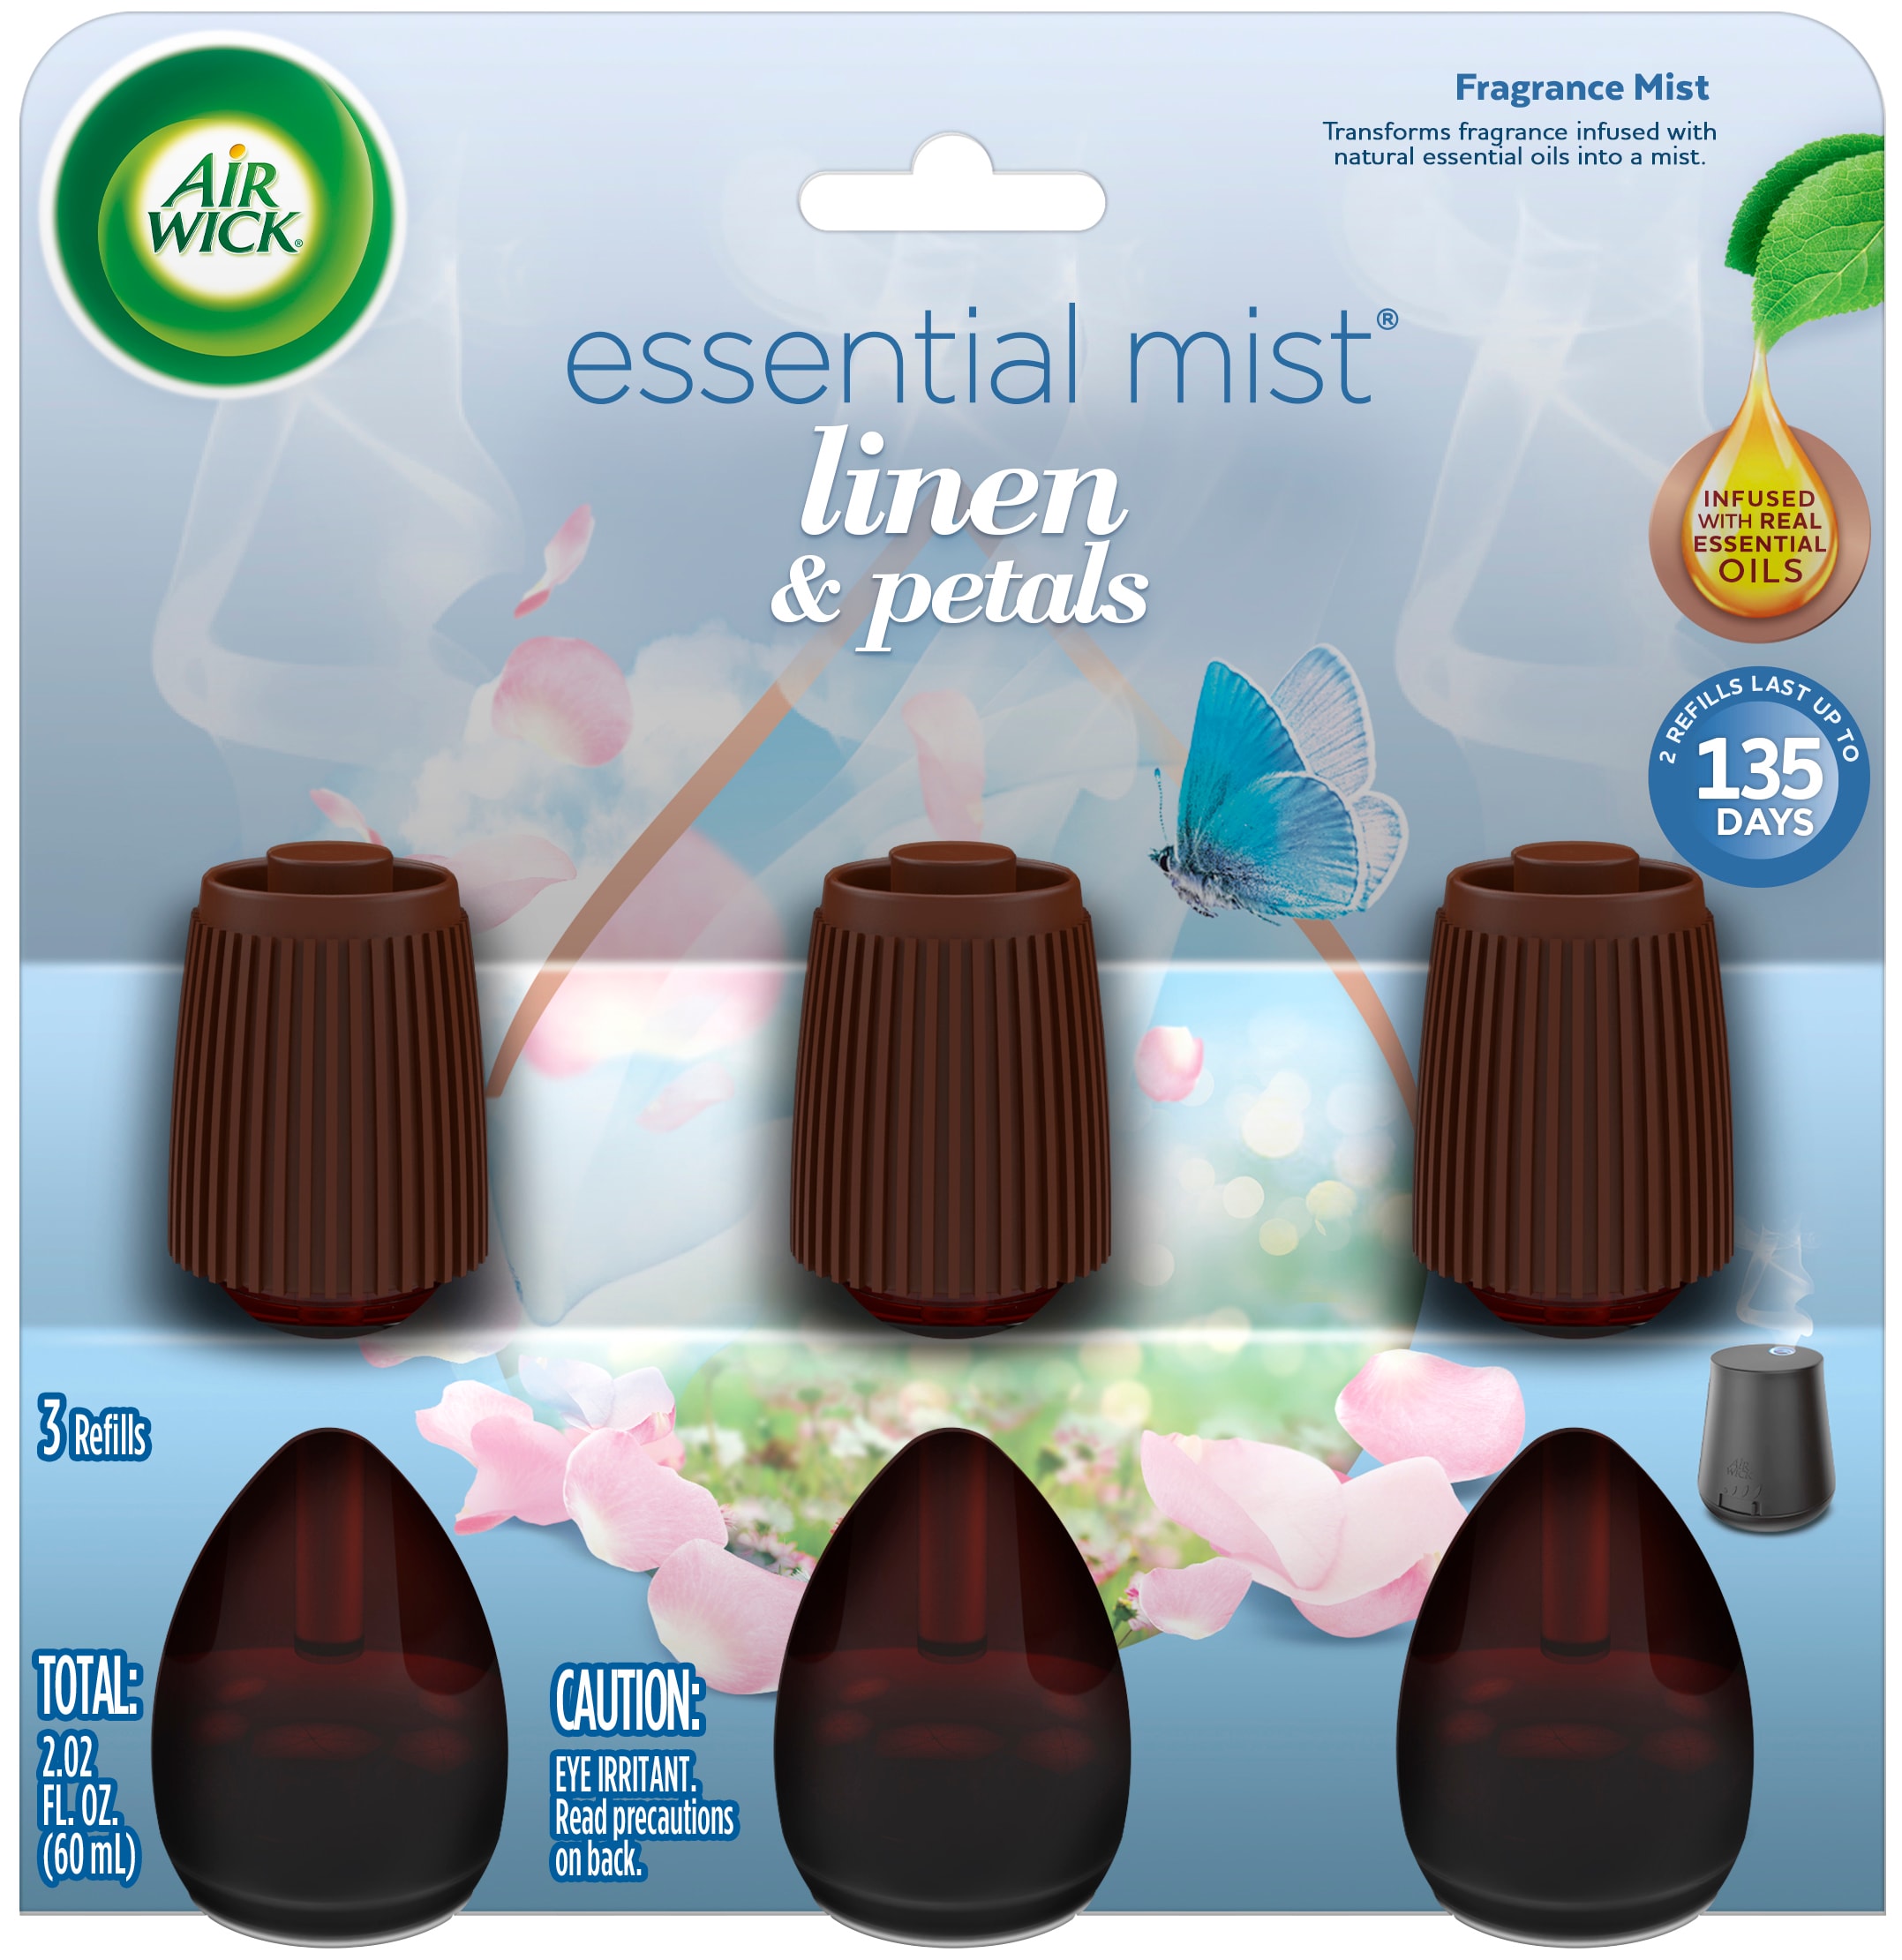 Air Wick Essential Mist Refill, Lavender & Almond Blossom, 0.67 fl oz, Pack  of 2